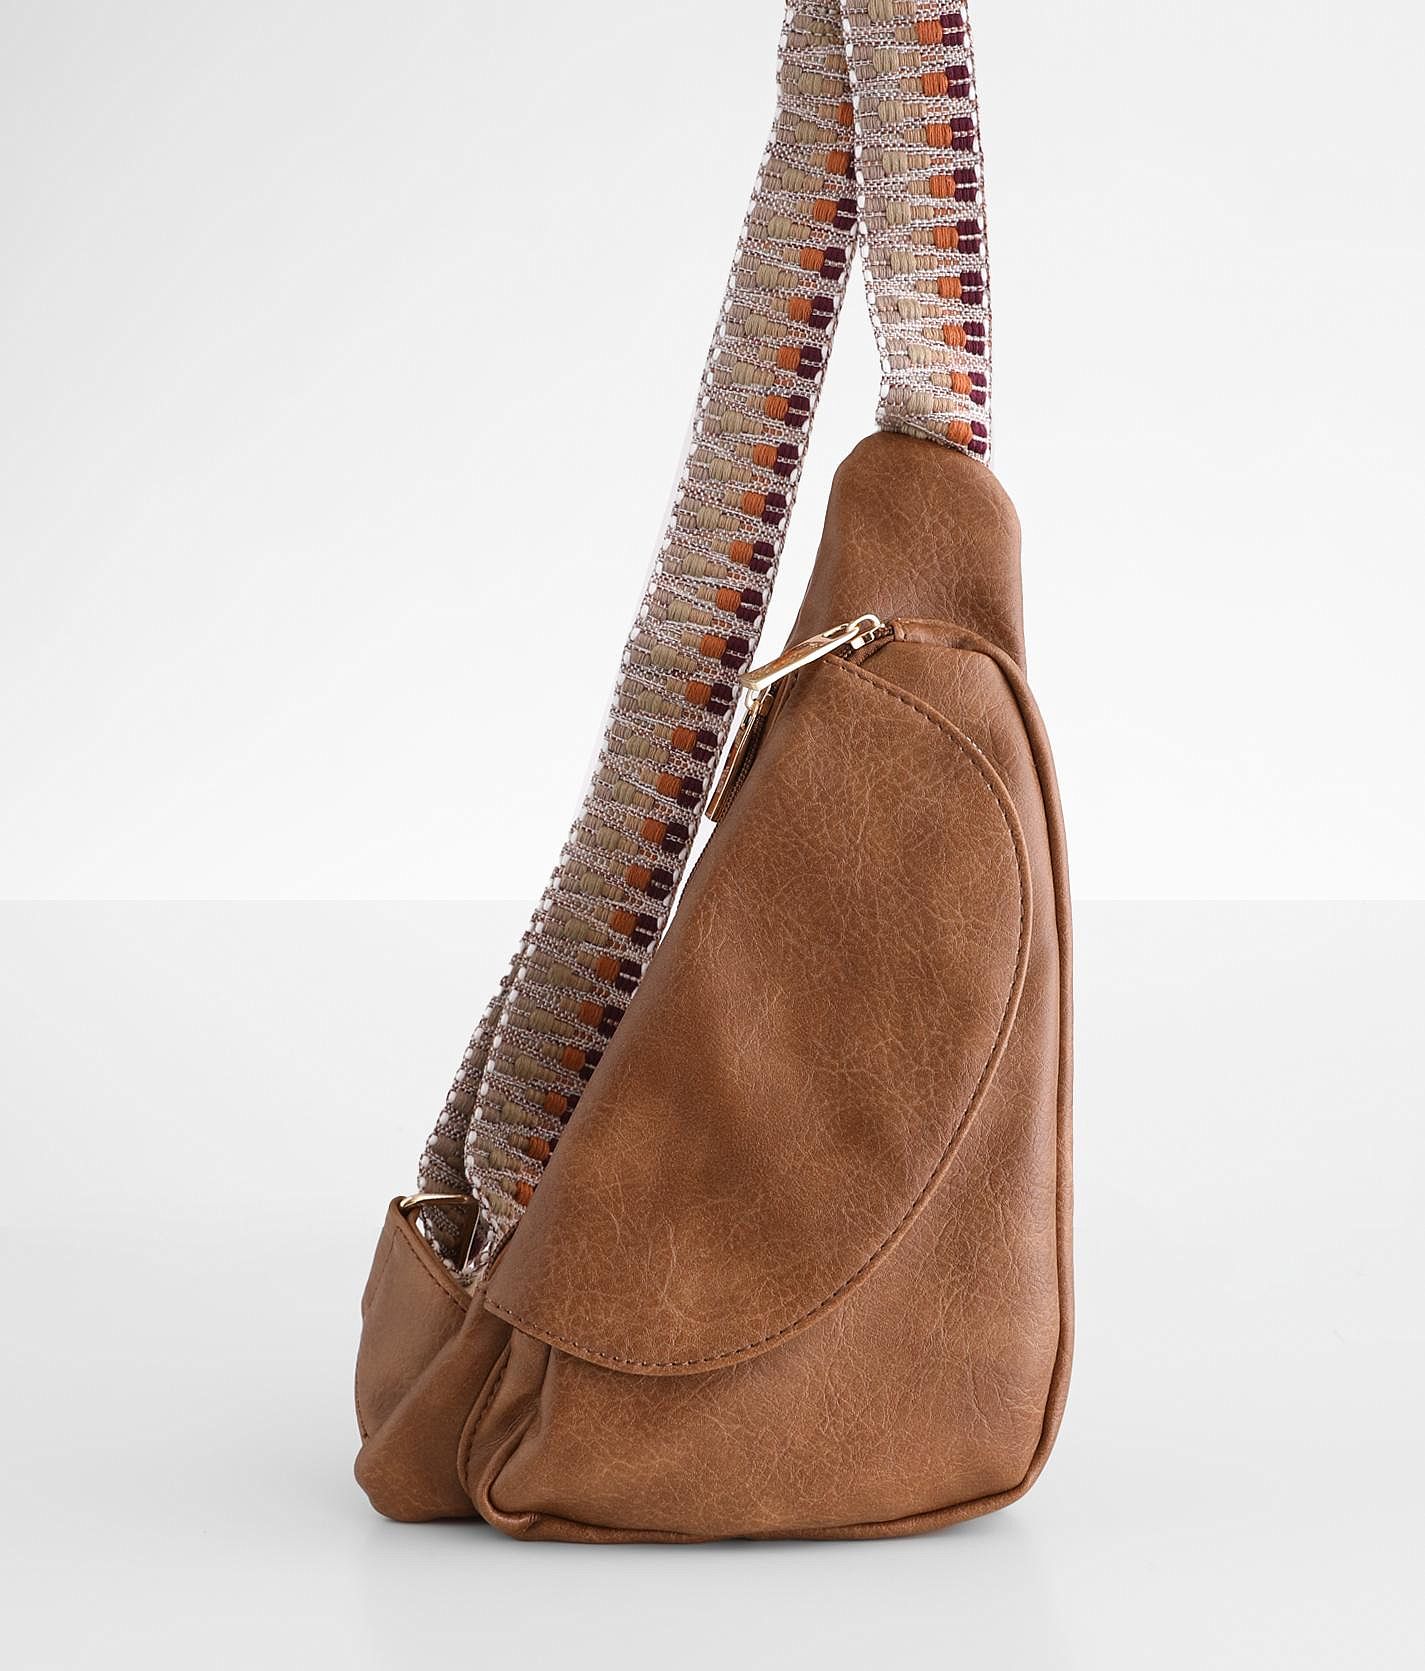 Tyler Rose Guitar Strap Sling Backpack - Women's Bags in Tan